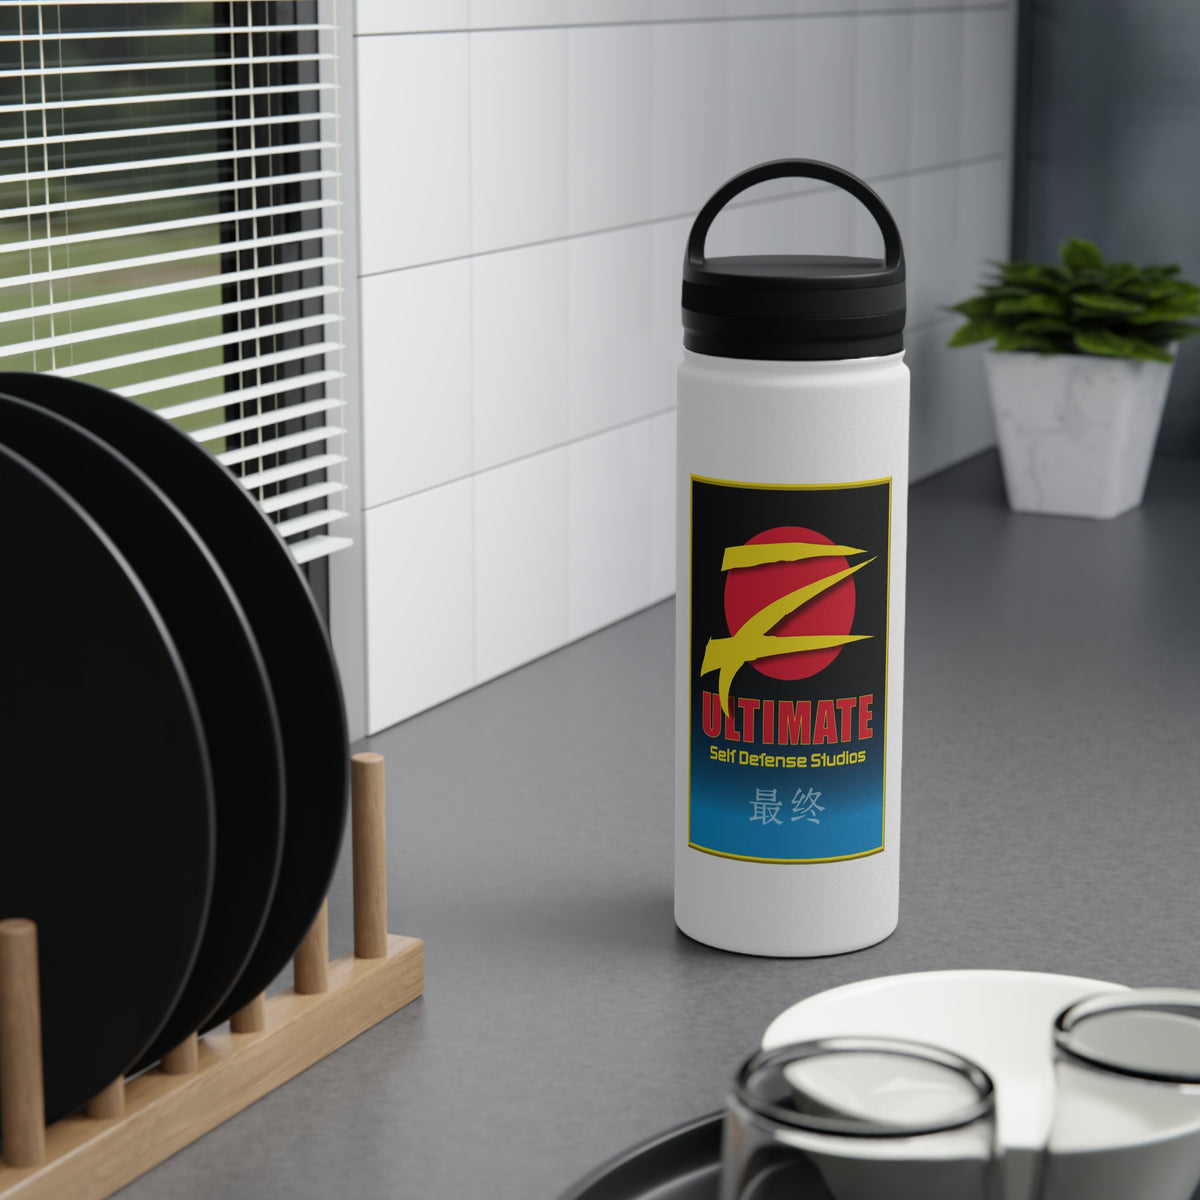 Z-Ultimate Stainless Steel Water Bottle, Handle Lid